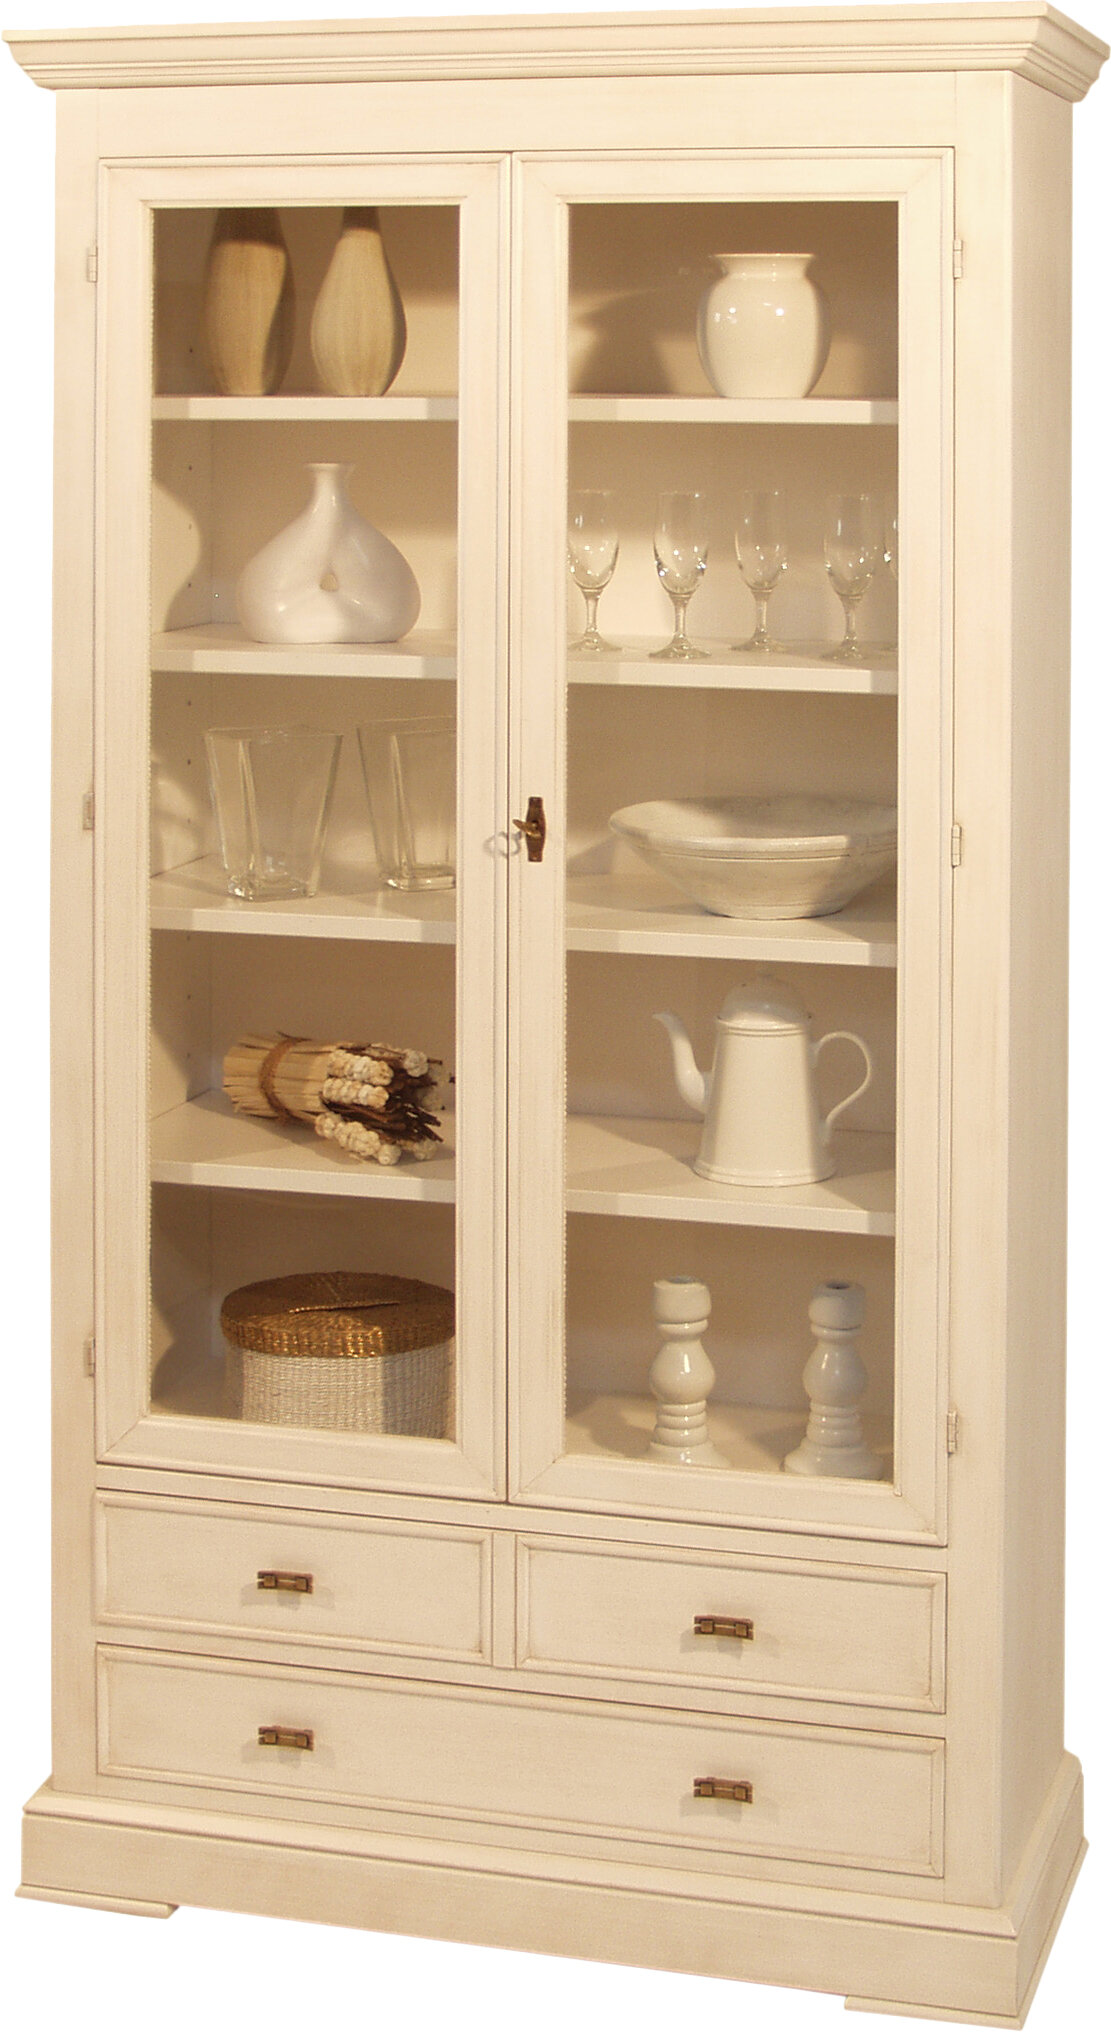 Ophelia Co Brianza Solid Wood Display Cabinet Wayfair Co Uk